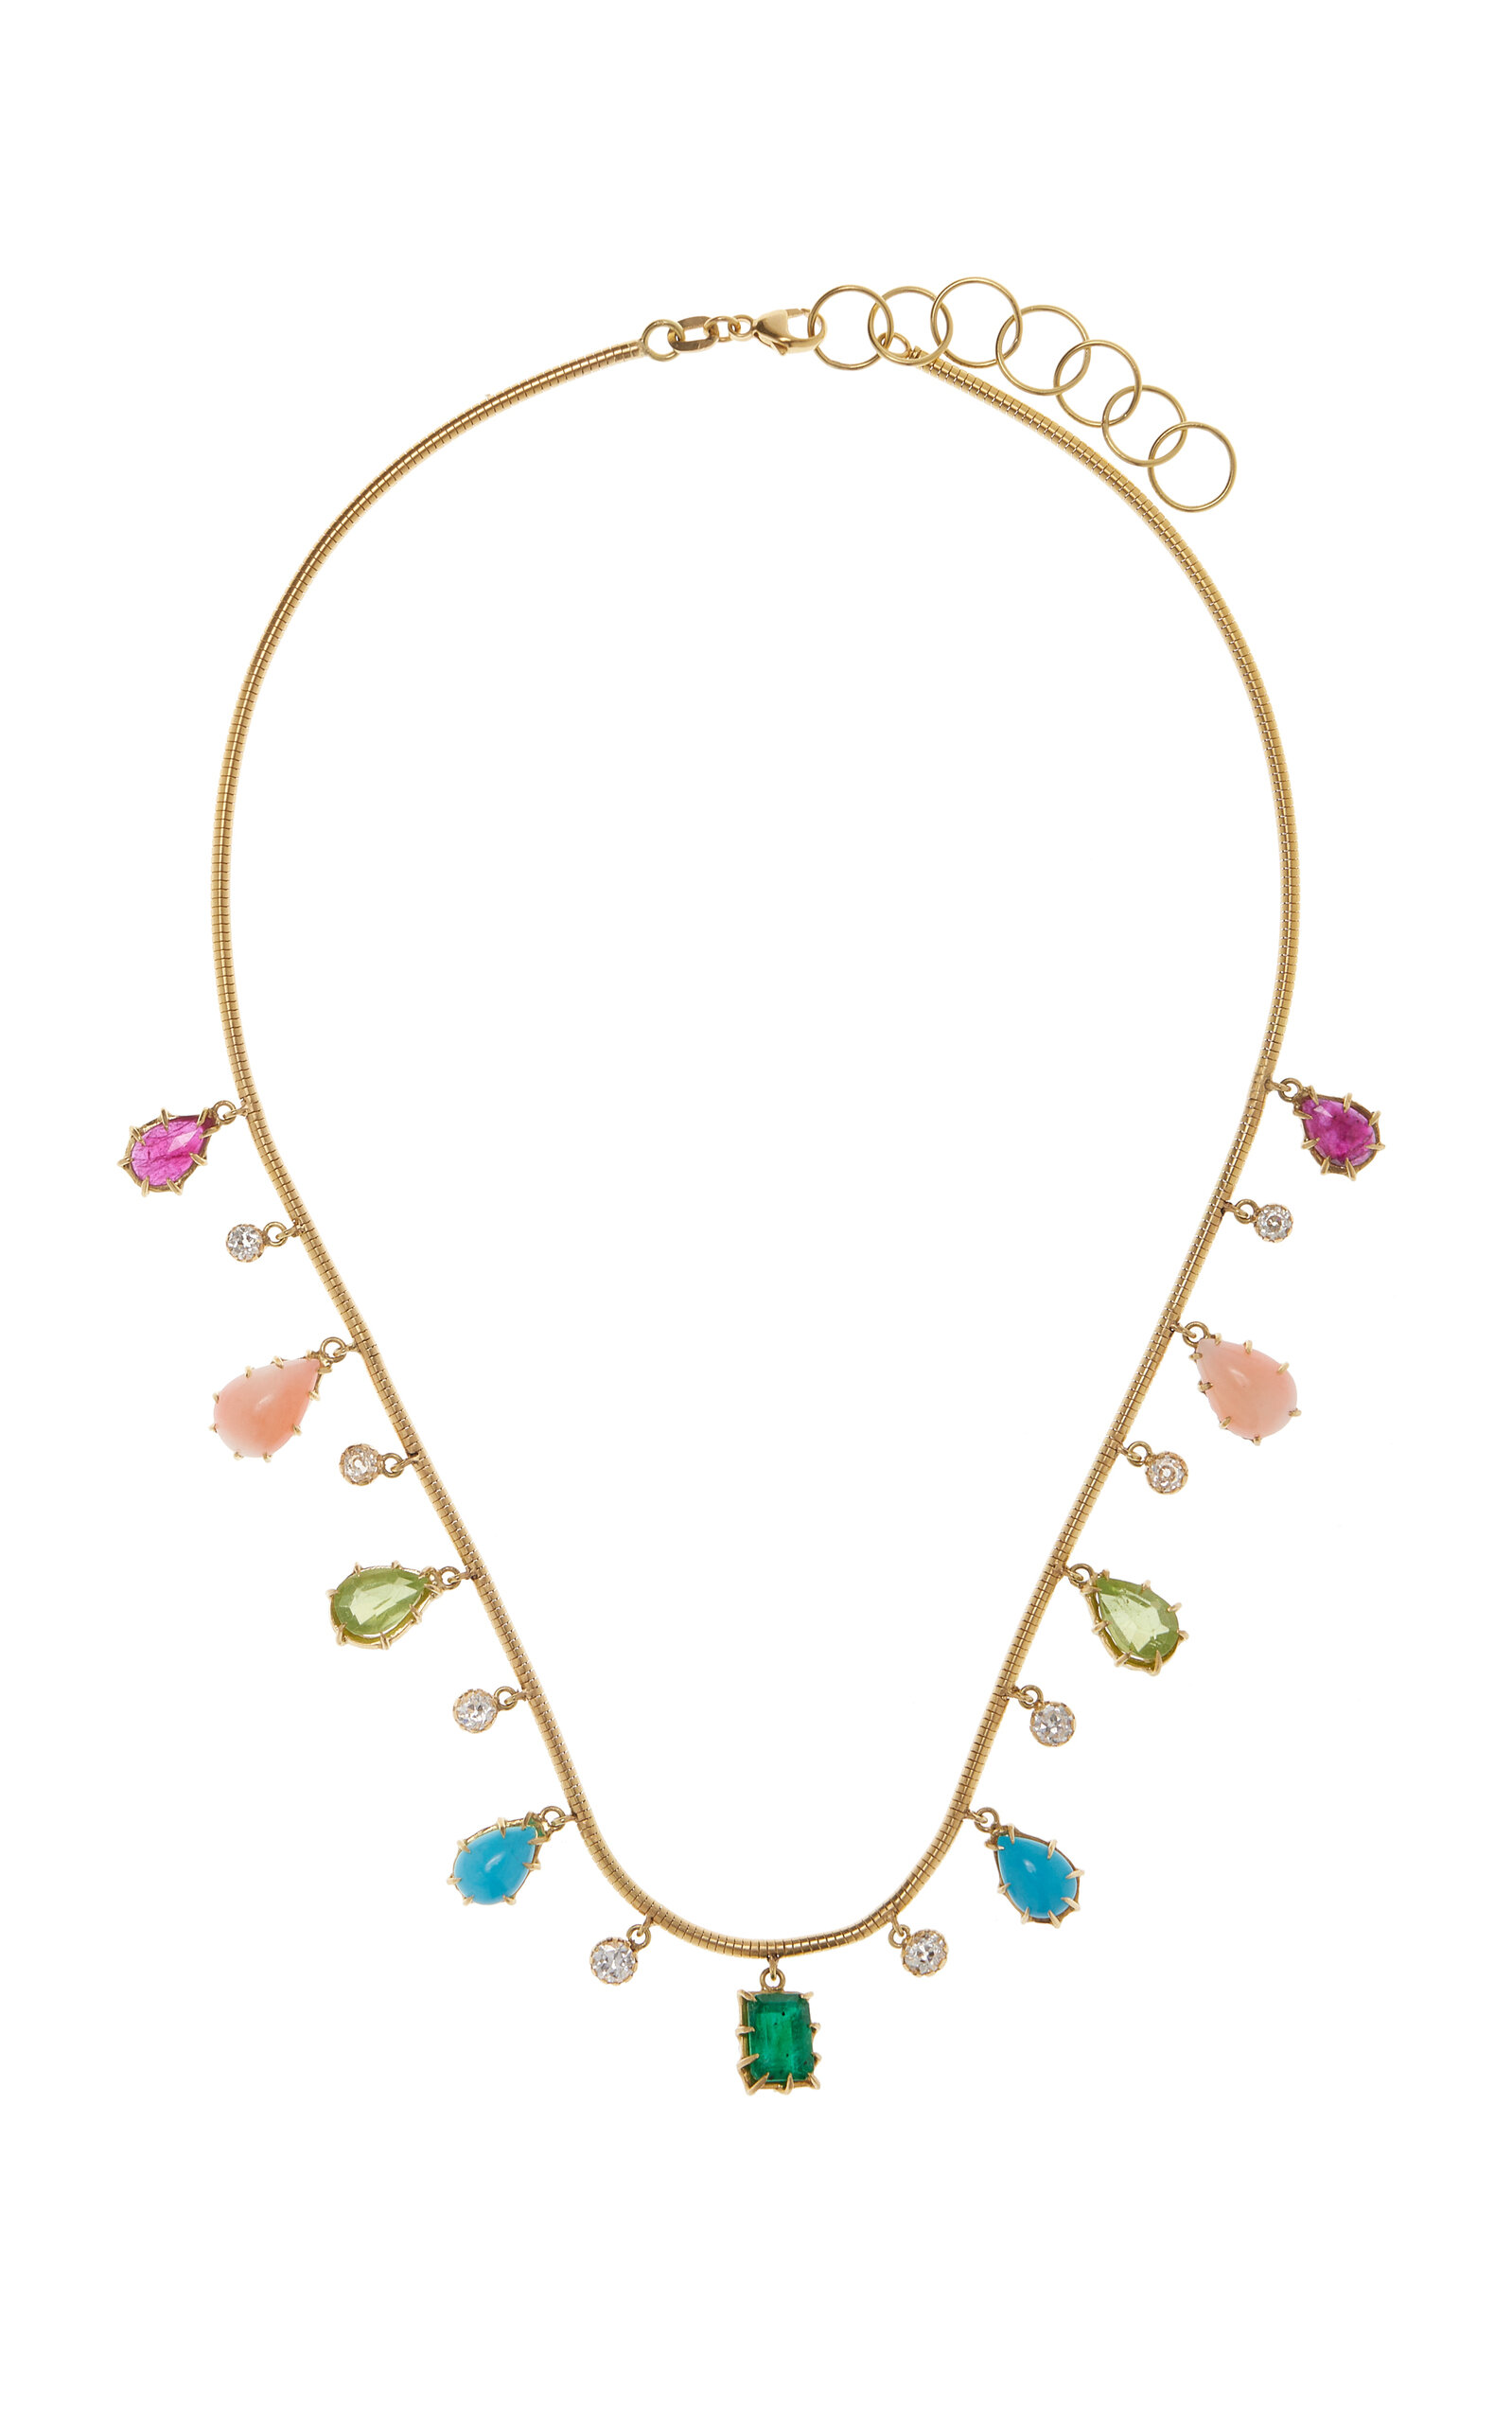 Jenna Blake 18k Gold Multi-color Fringe Necklace